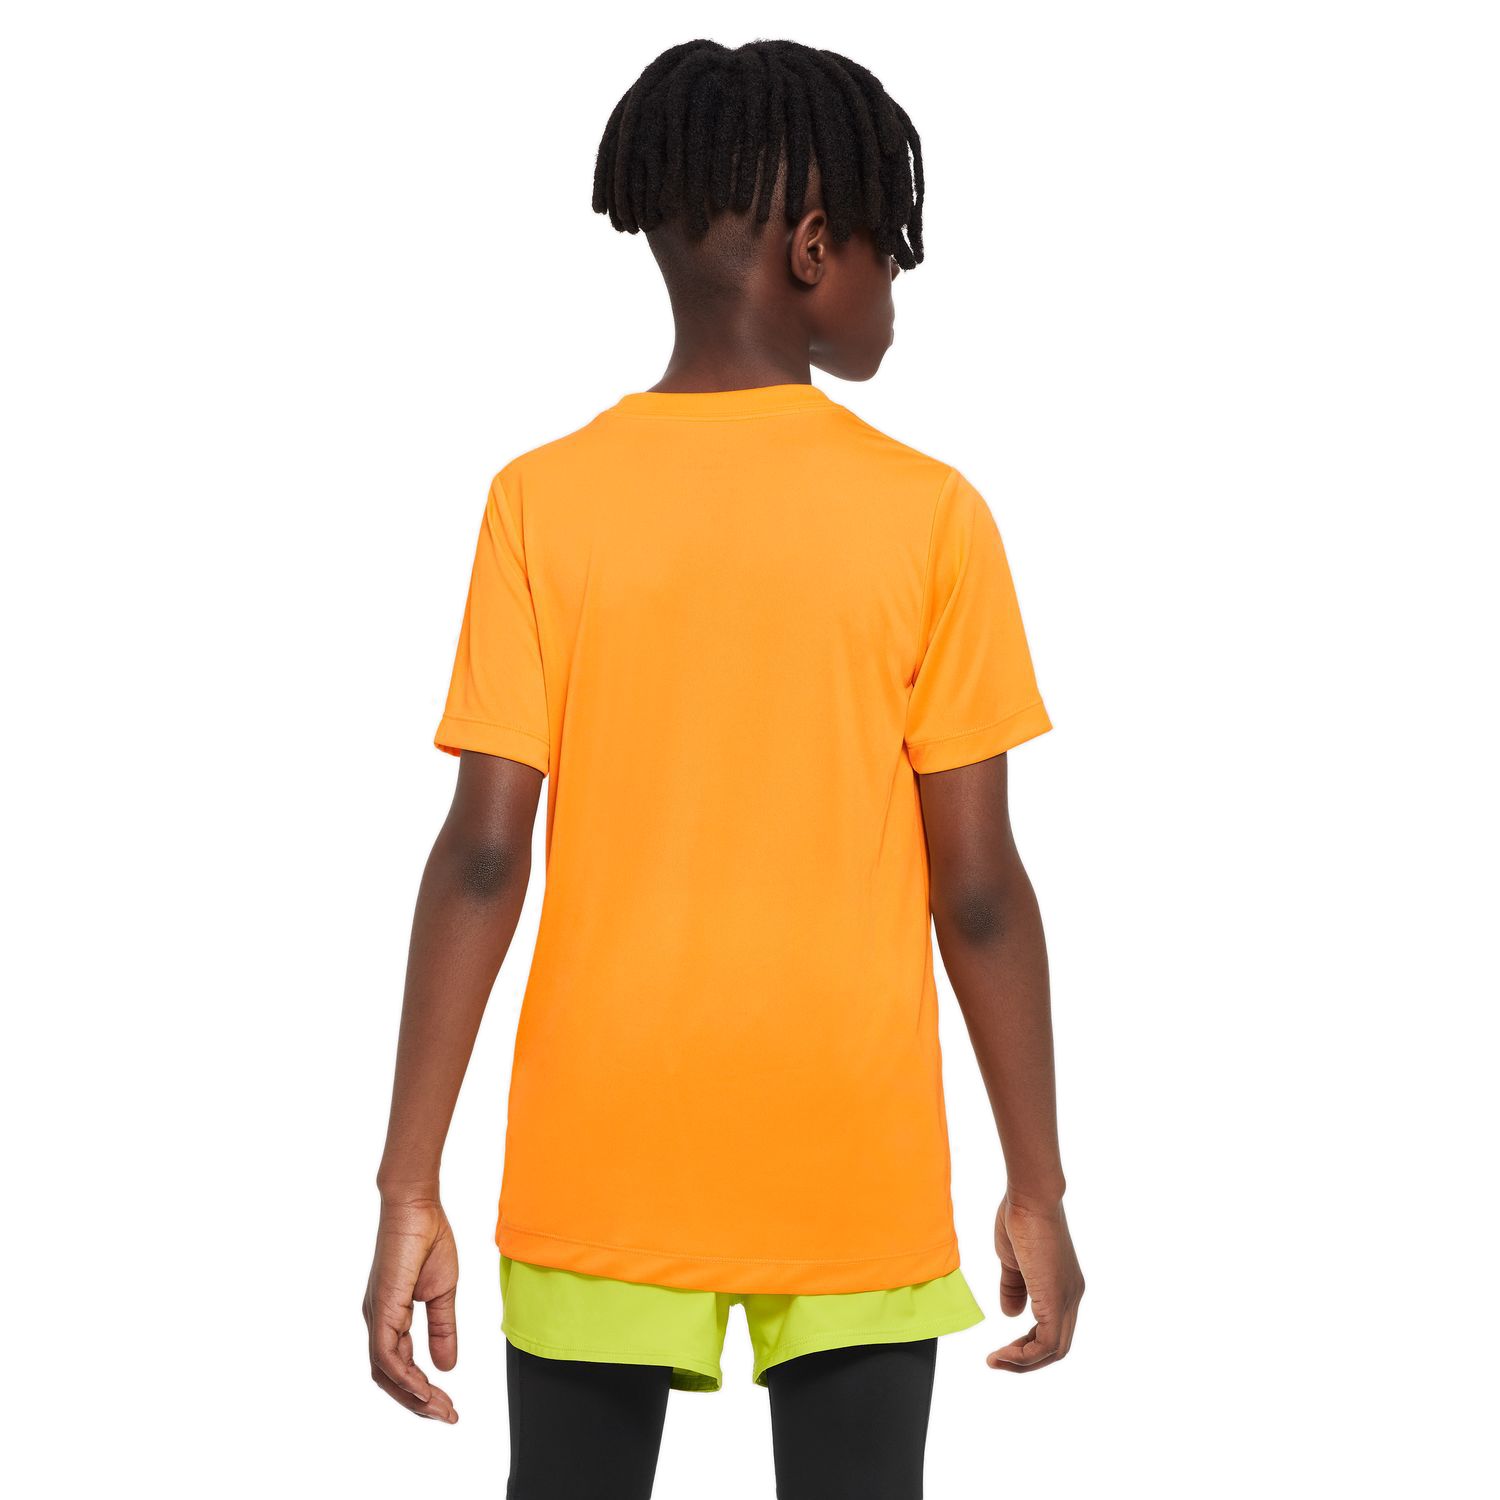 Mlb Atlanta Braves Toddler Boys' 3pk T-shirt - 4t : Target